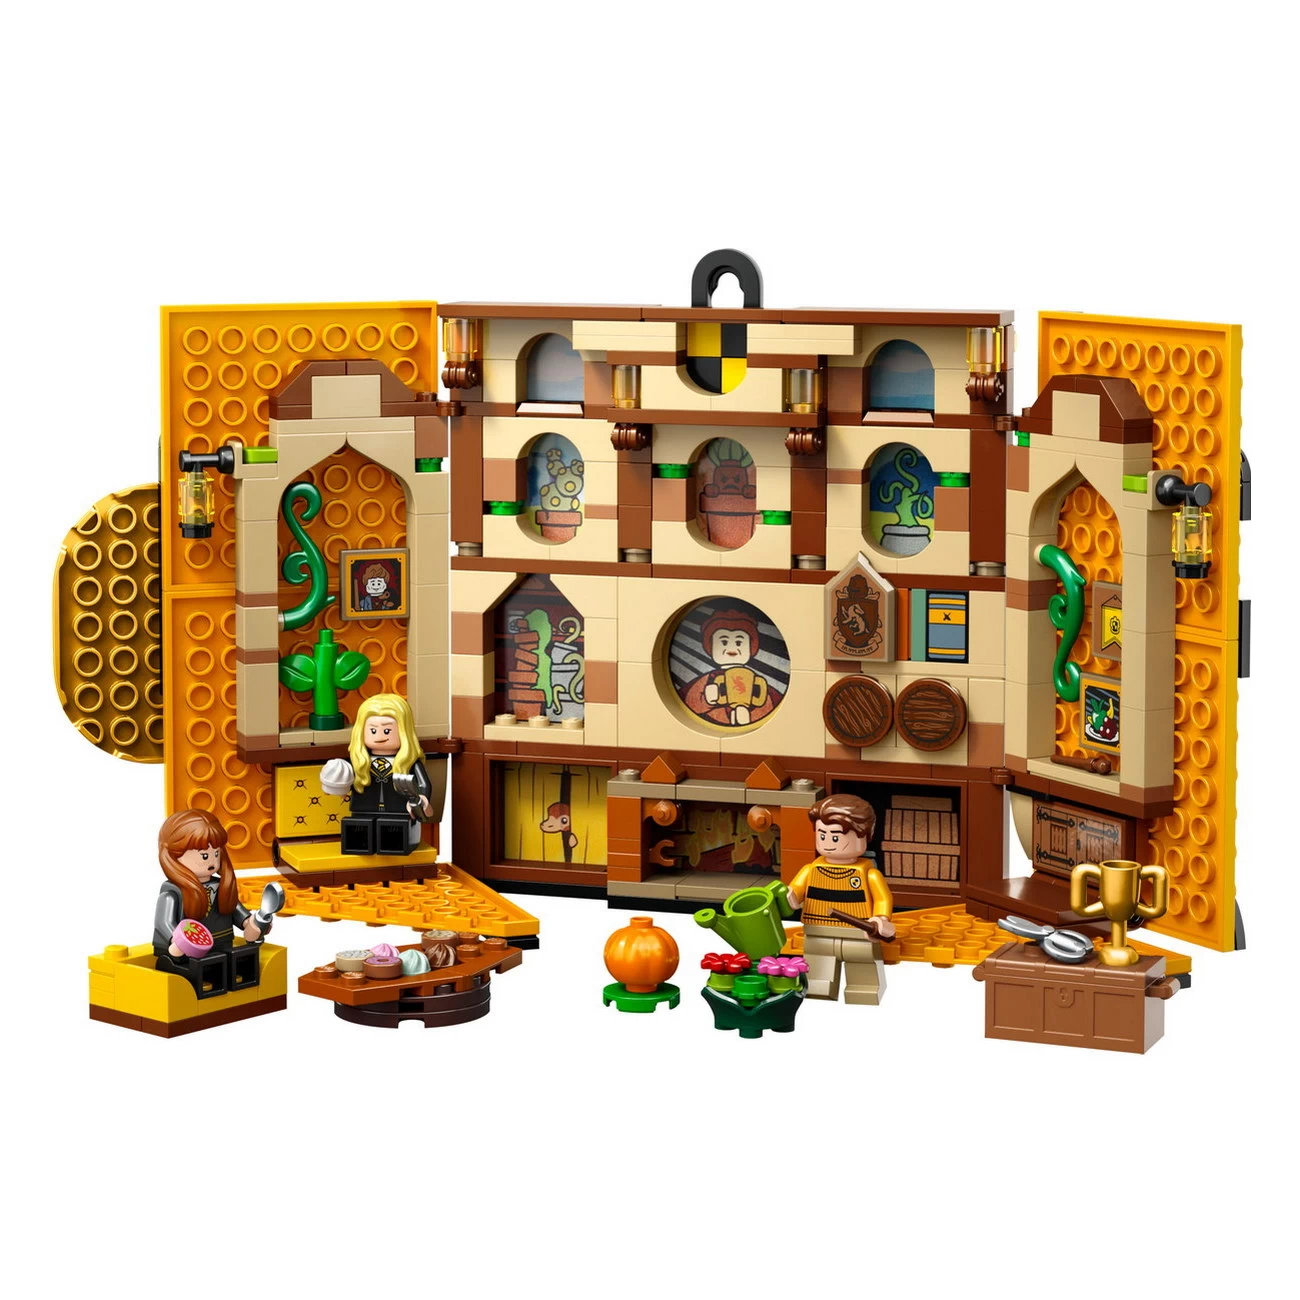 LEGO Harry Potter 76412 - Hausbanner Hufflepuff